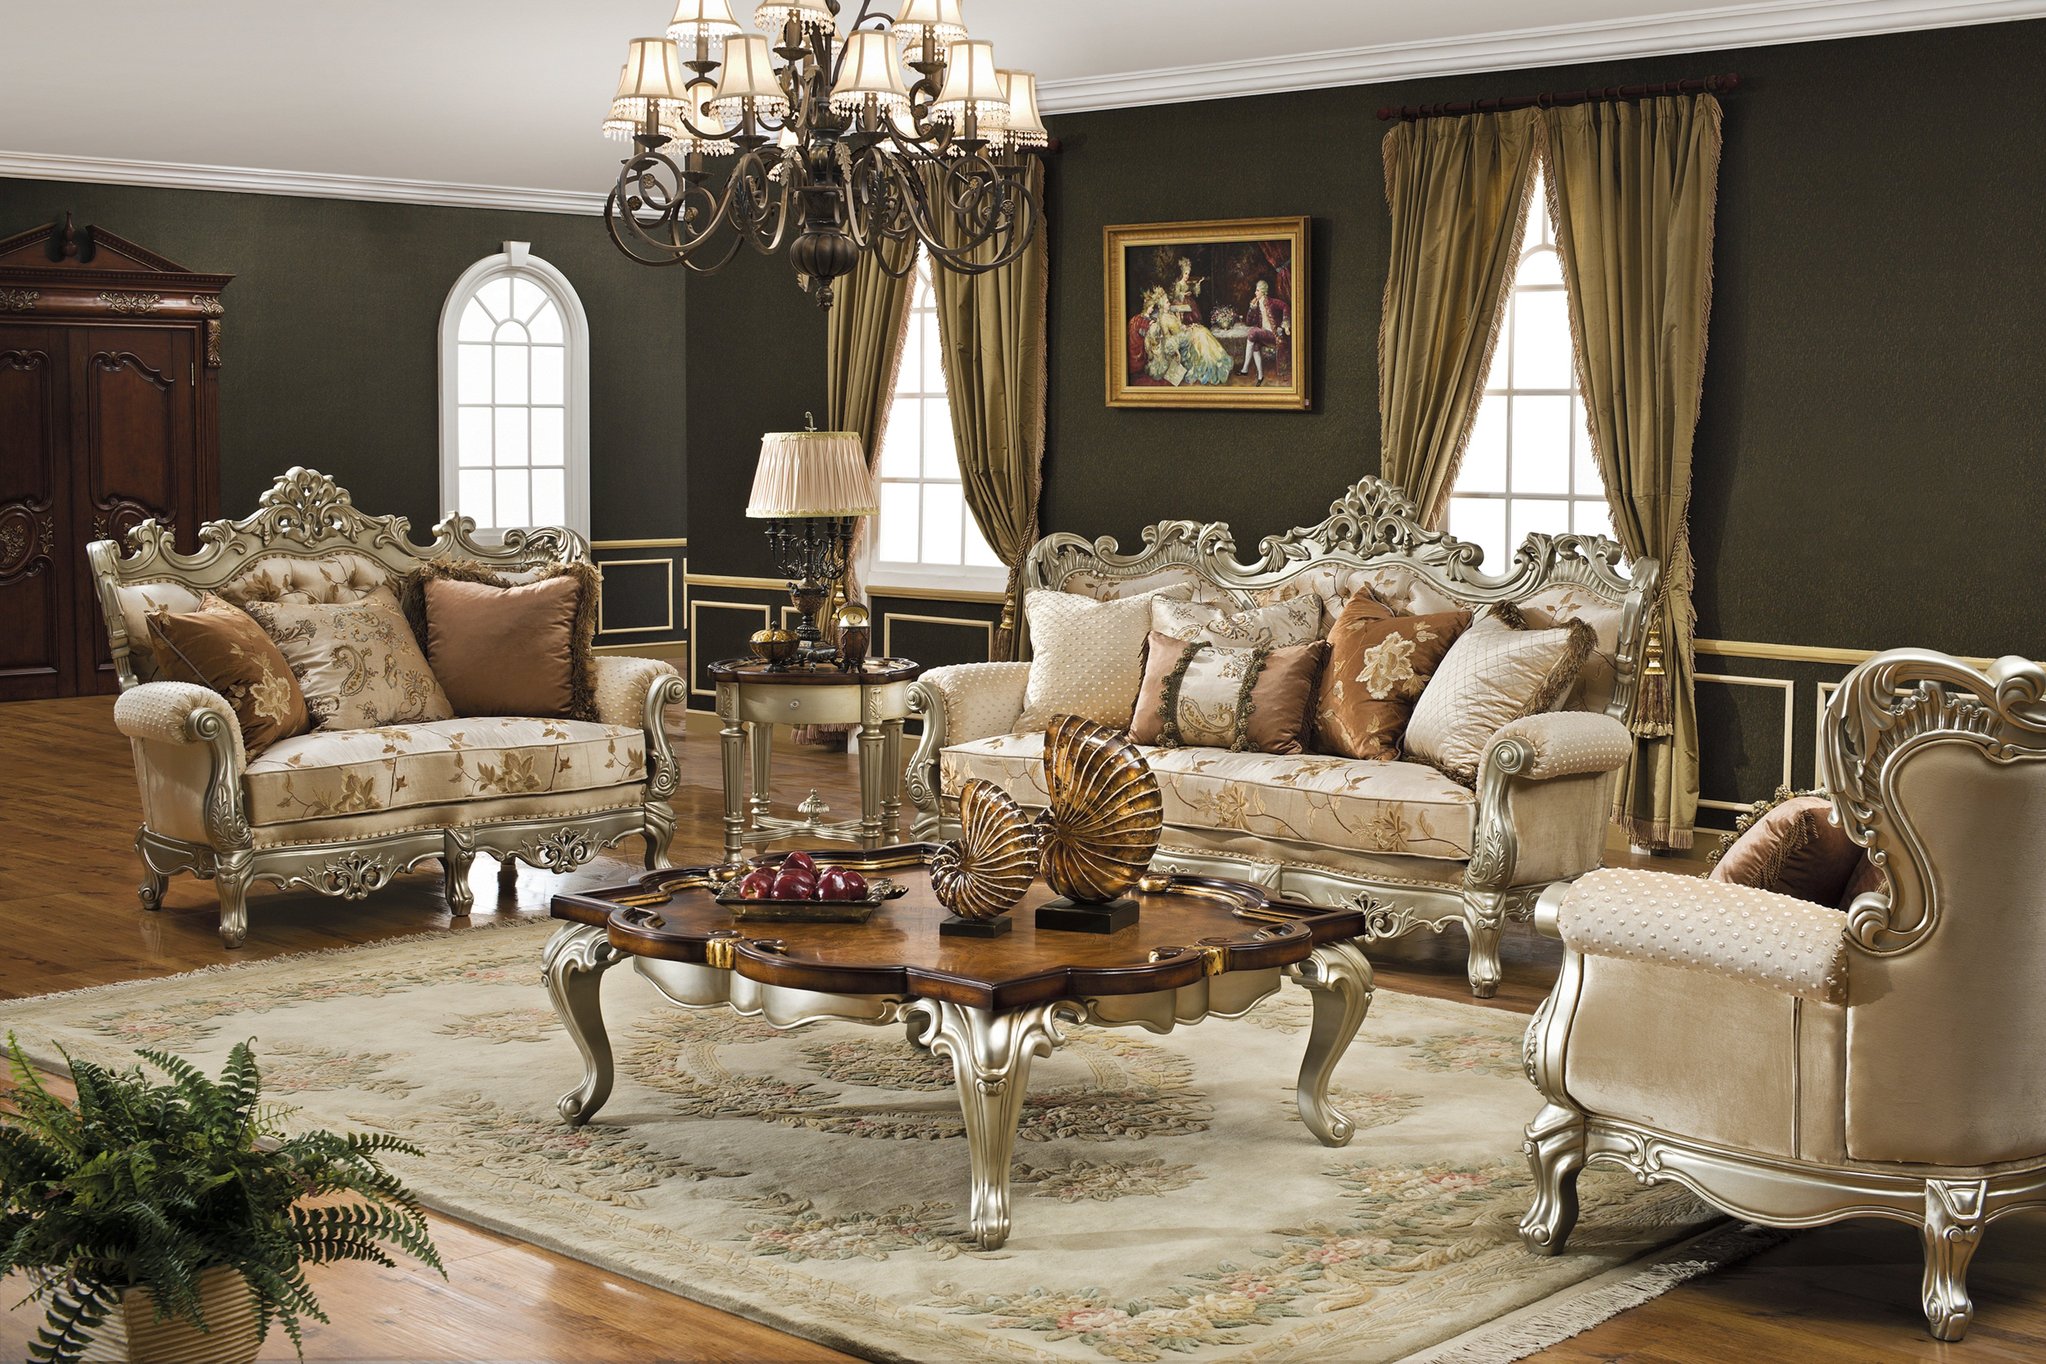 Classic glamorous living room. 